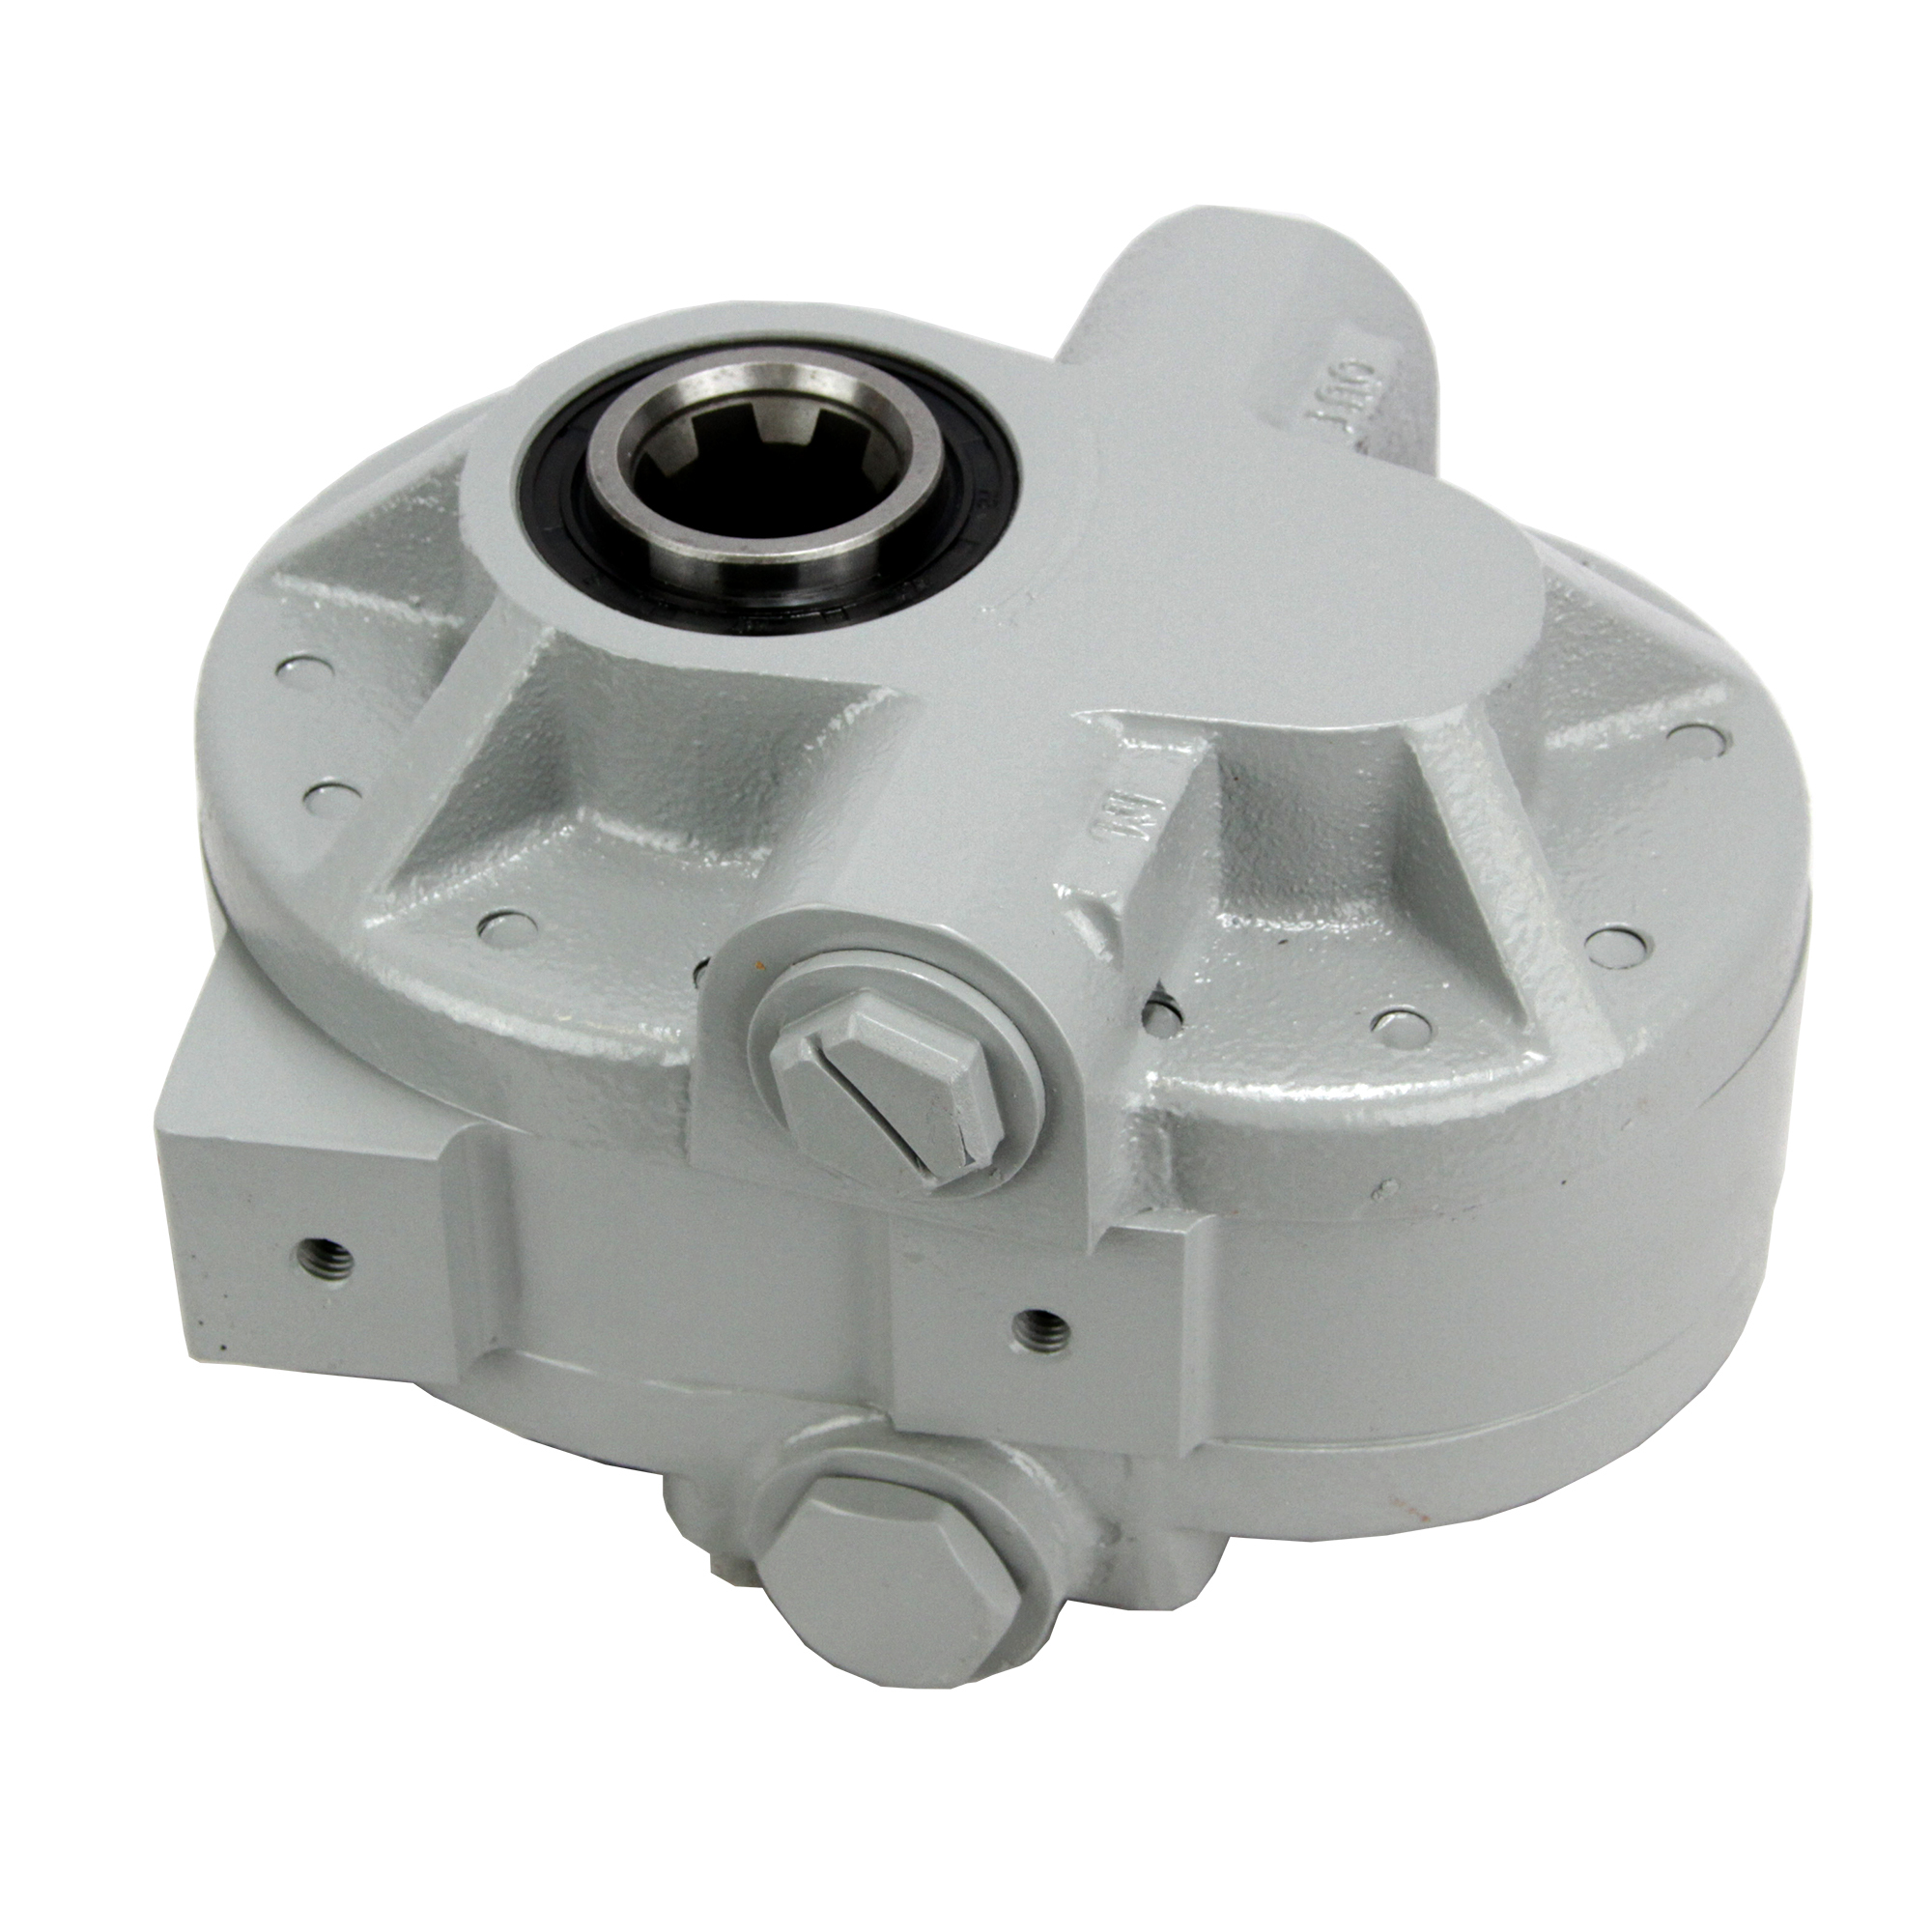 Bailey, PTO Hydraulic Gear Pump, Max. PSI 2500, Max. RPM 540, Max. Flow Rate 7.4 GPM, Model 252567